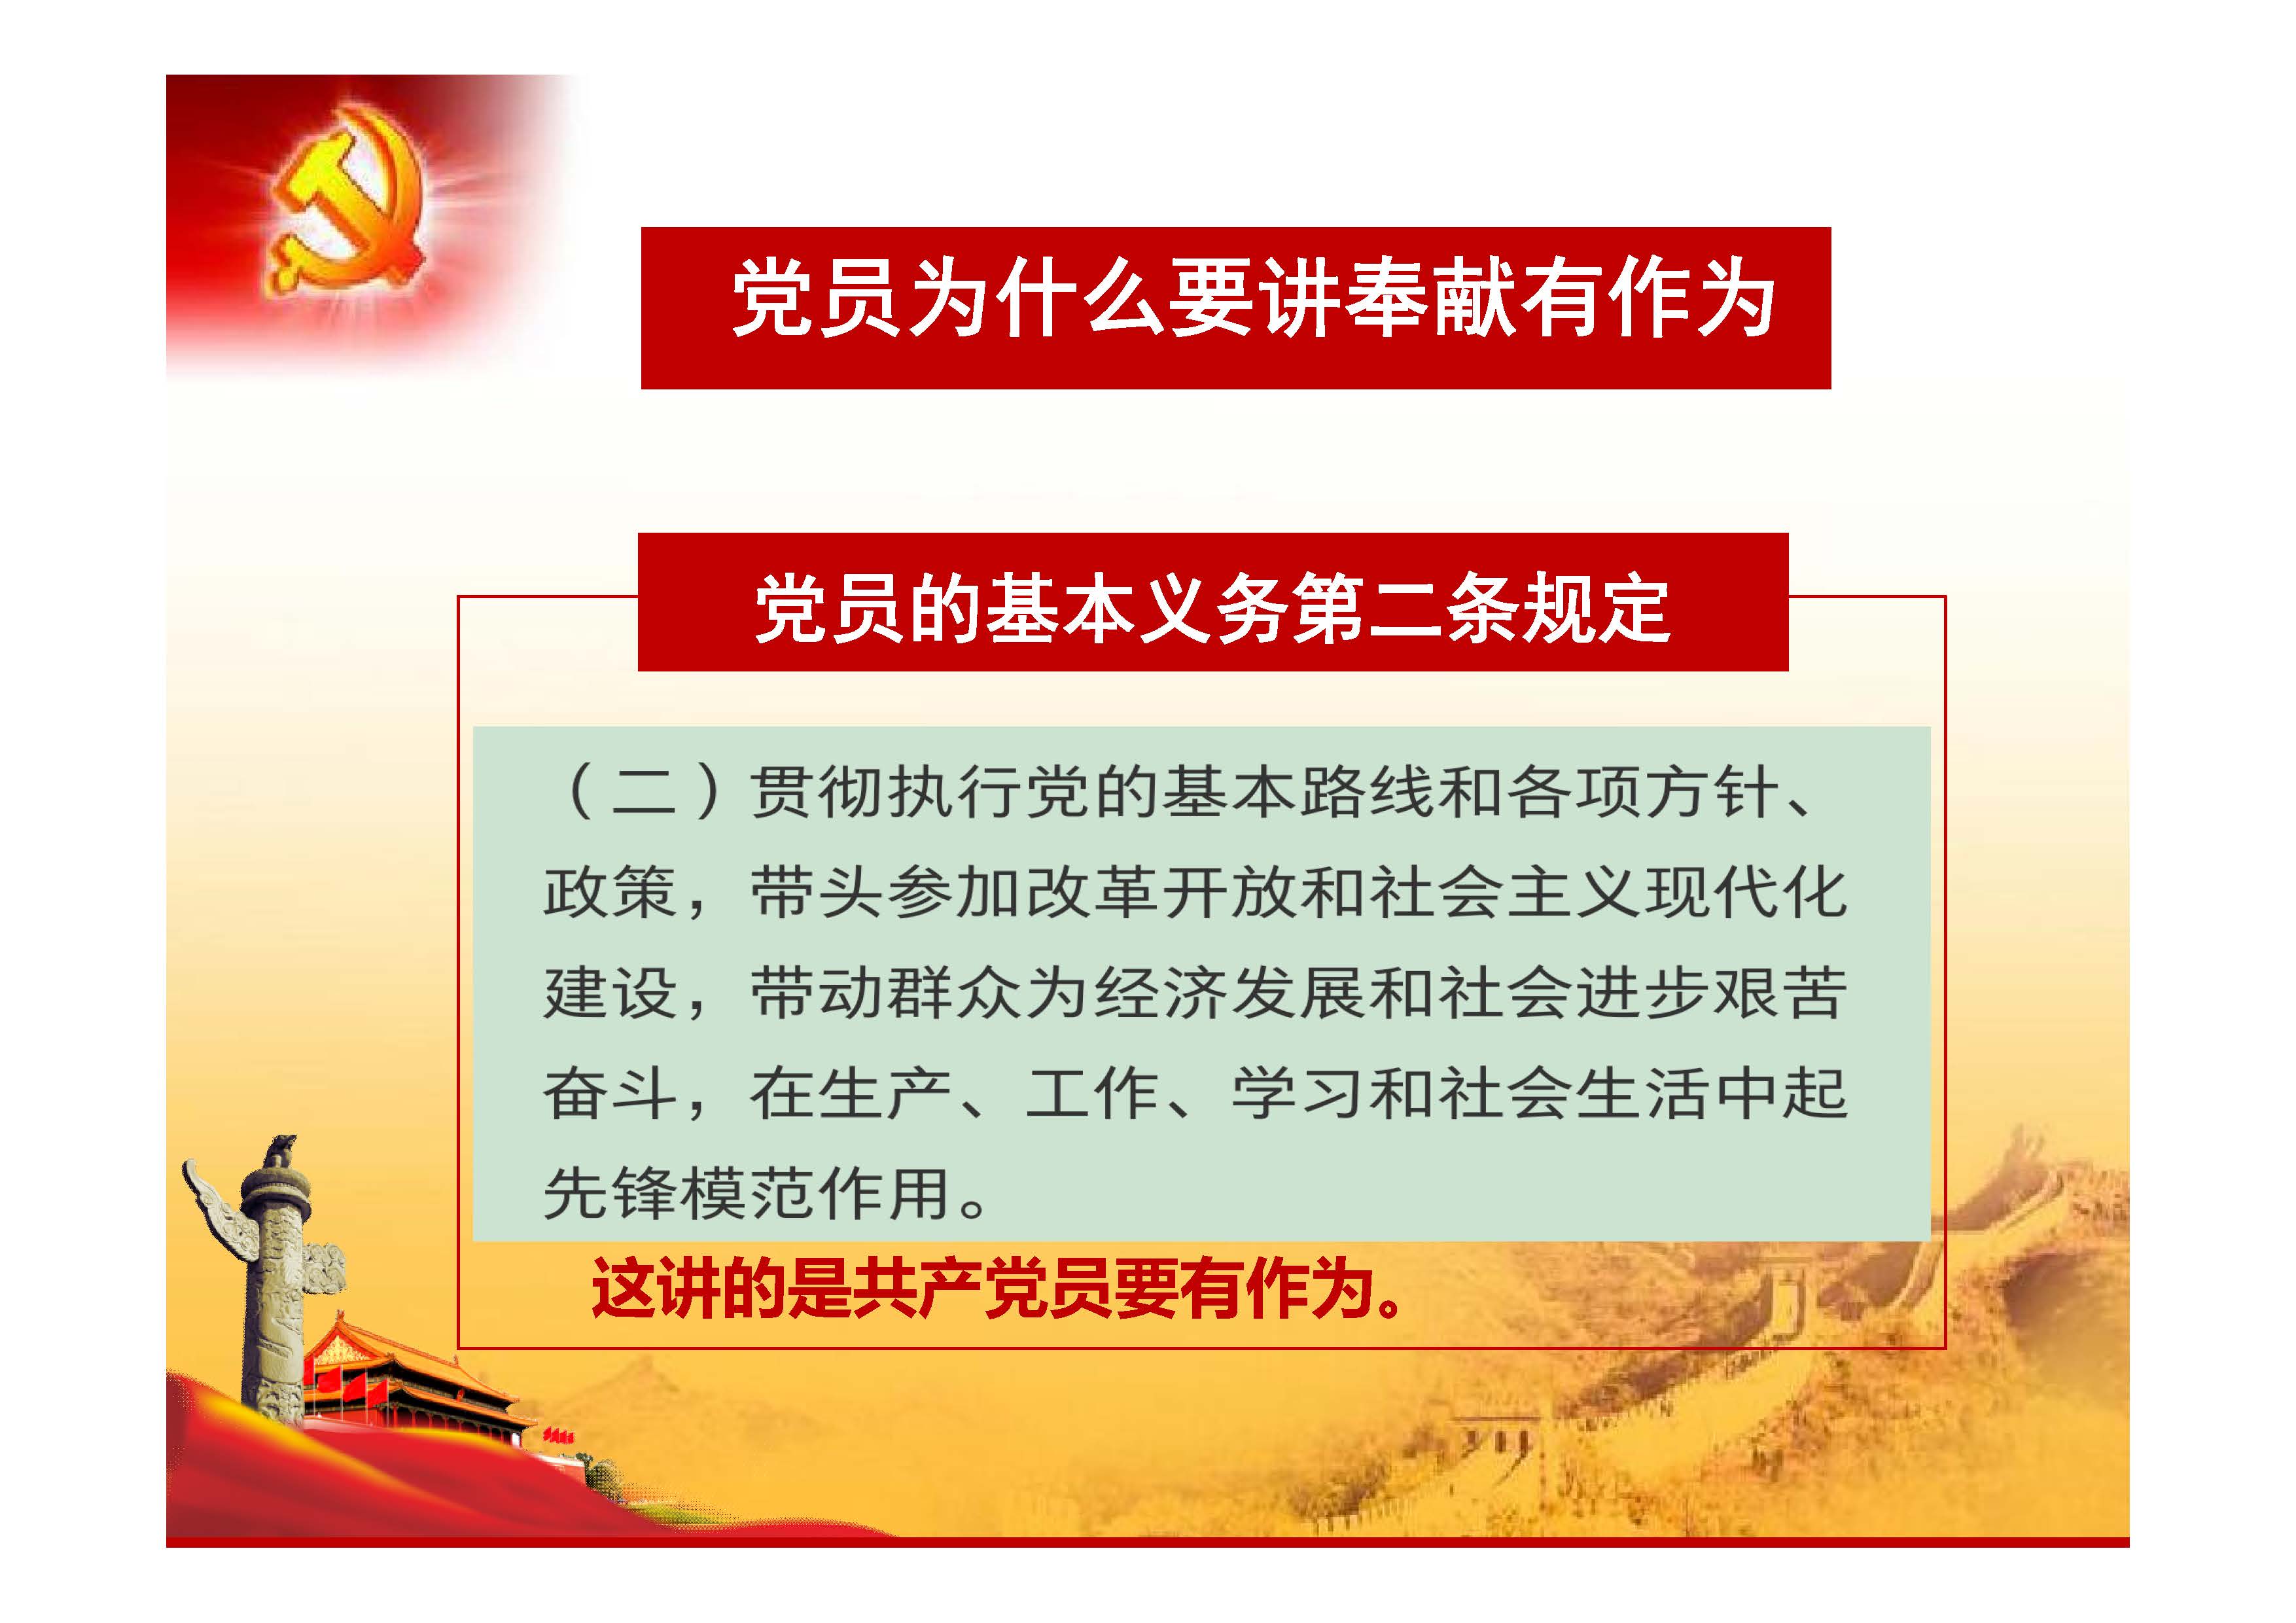 [PPT]中国兵器装备集团洛阳北方企业集团有限公司《做新时代合格党员 立足岗位讲奉献比作为》